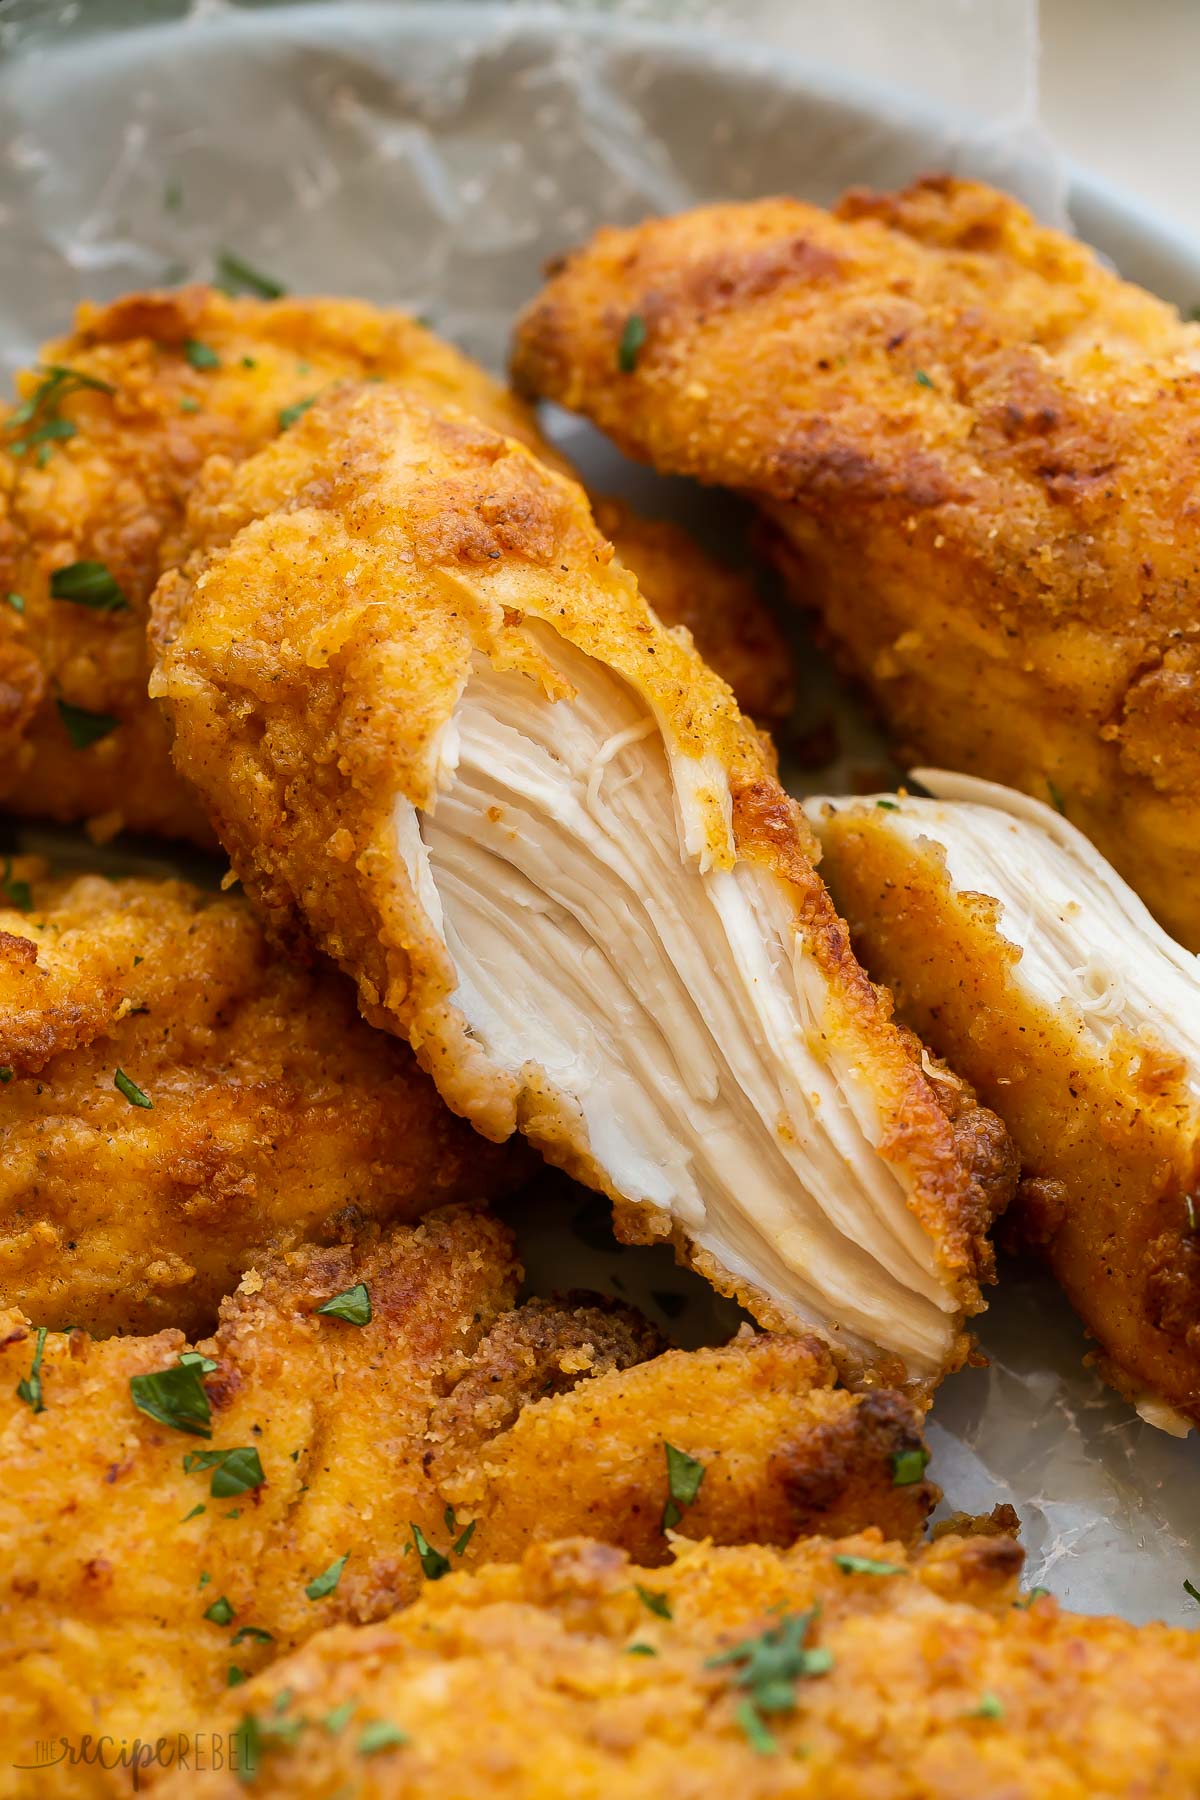 molen verzending inspanning The BEST Oven Fried Chicken [VIDEO] | The Recipe Rebel